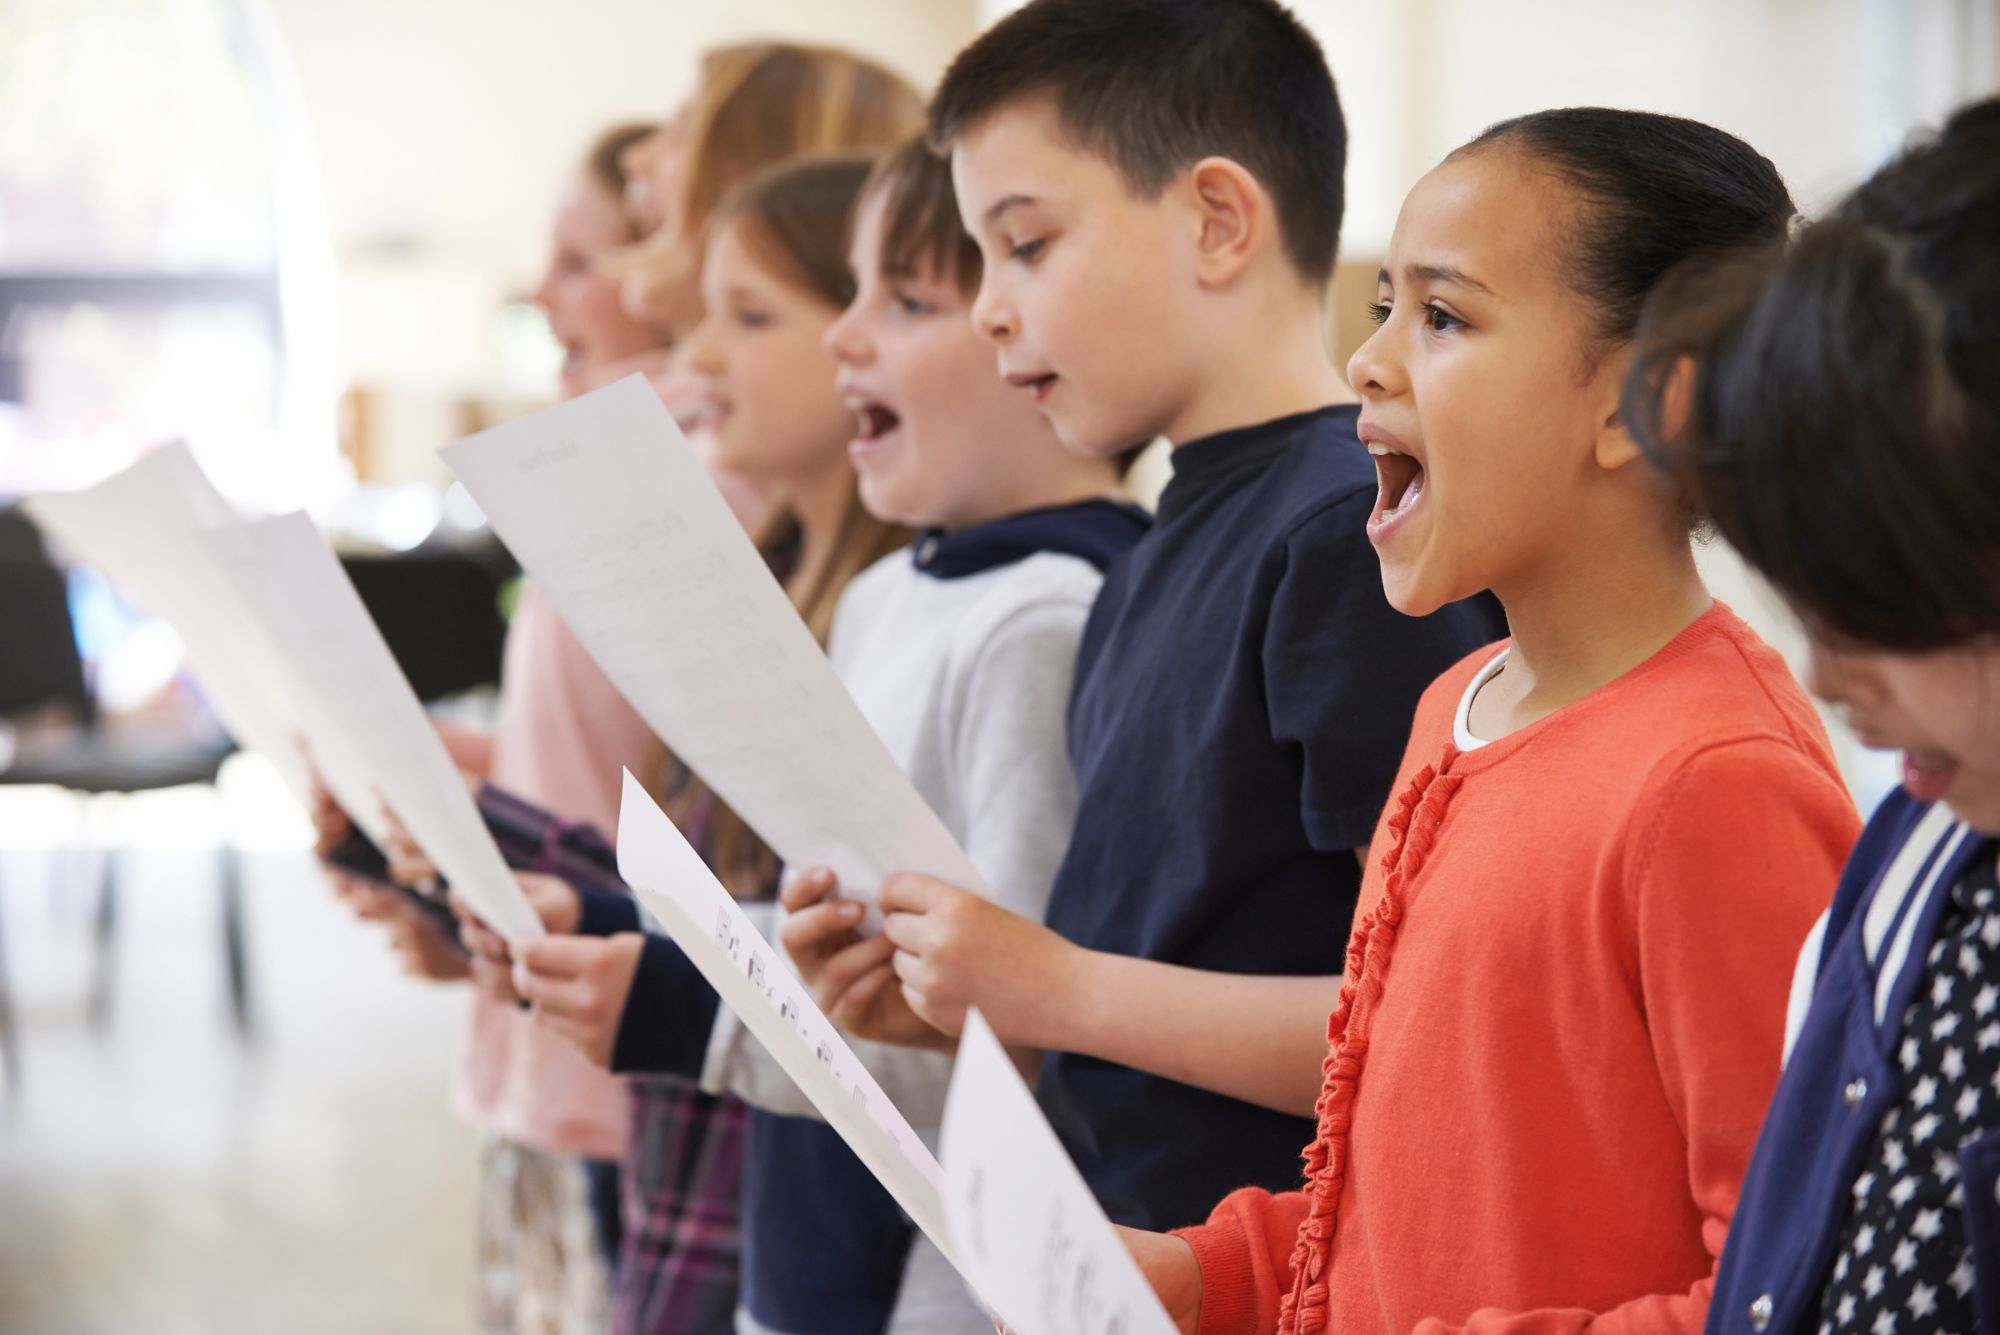 Children singing songs